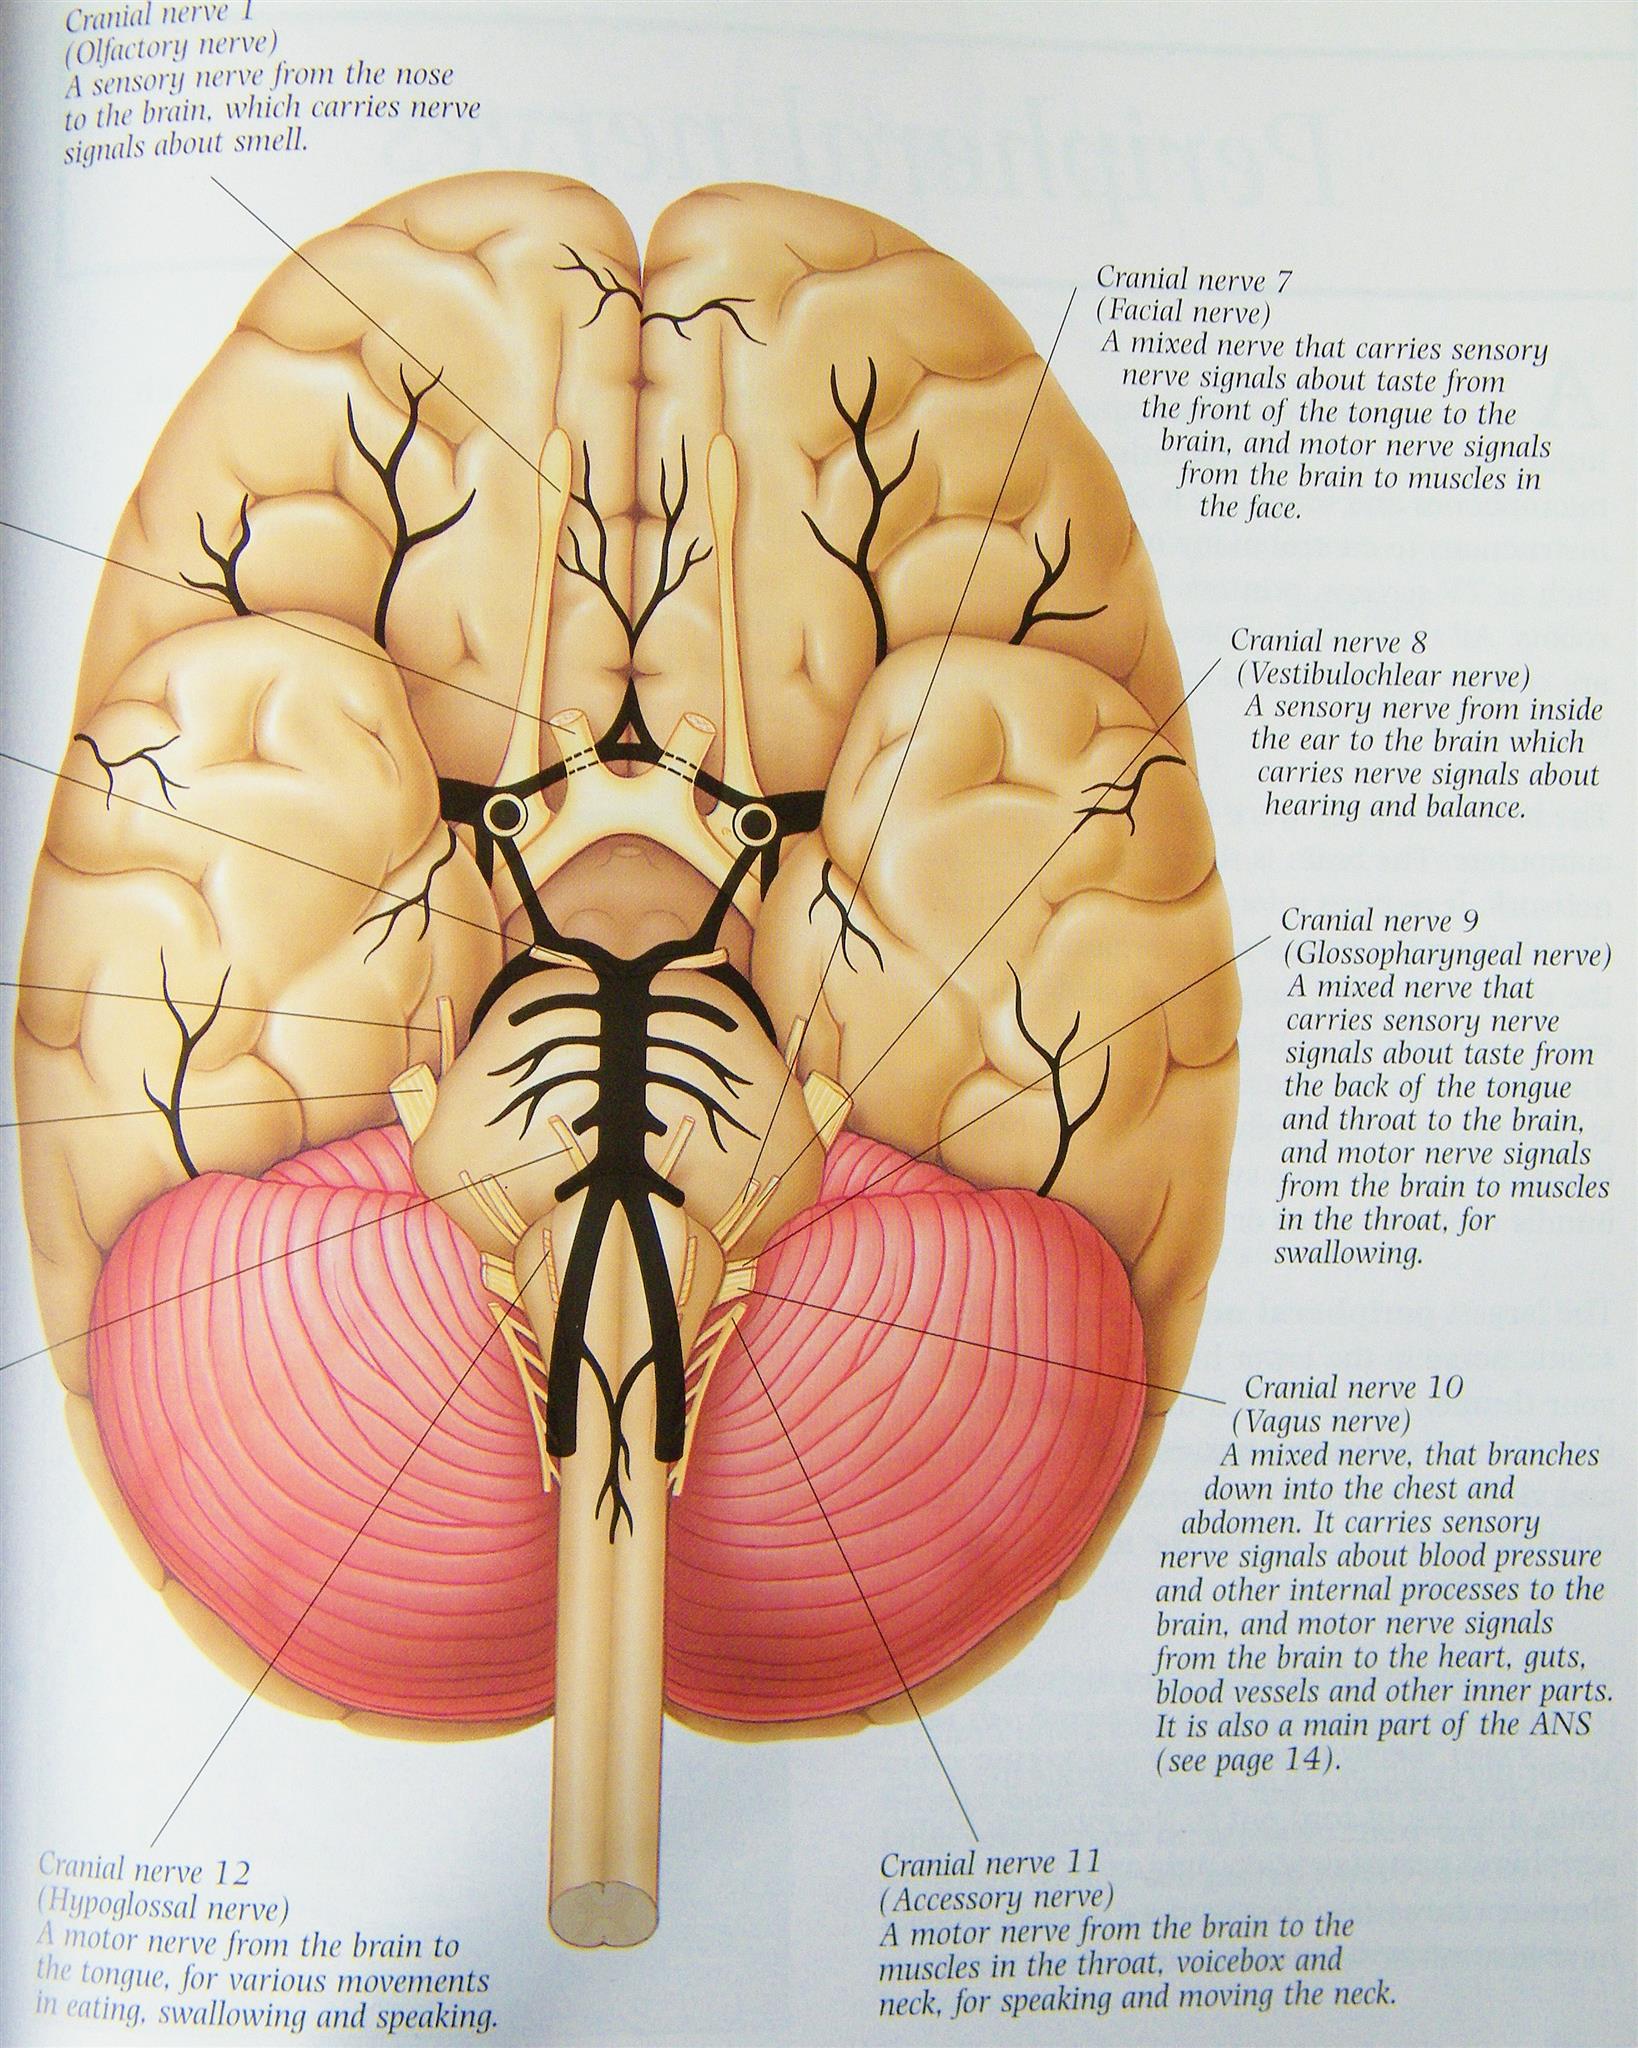 Brain: the limbic system